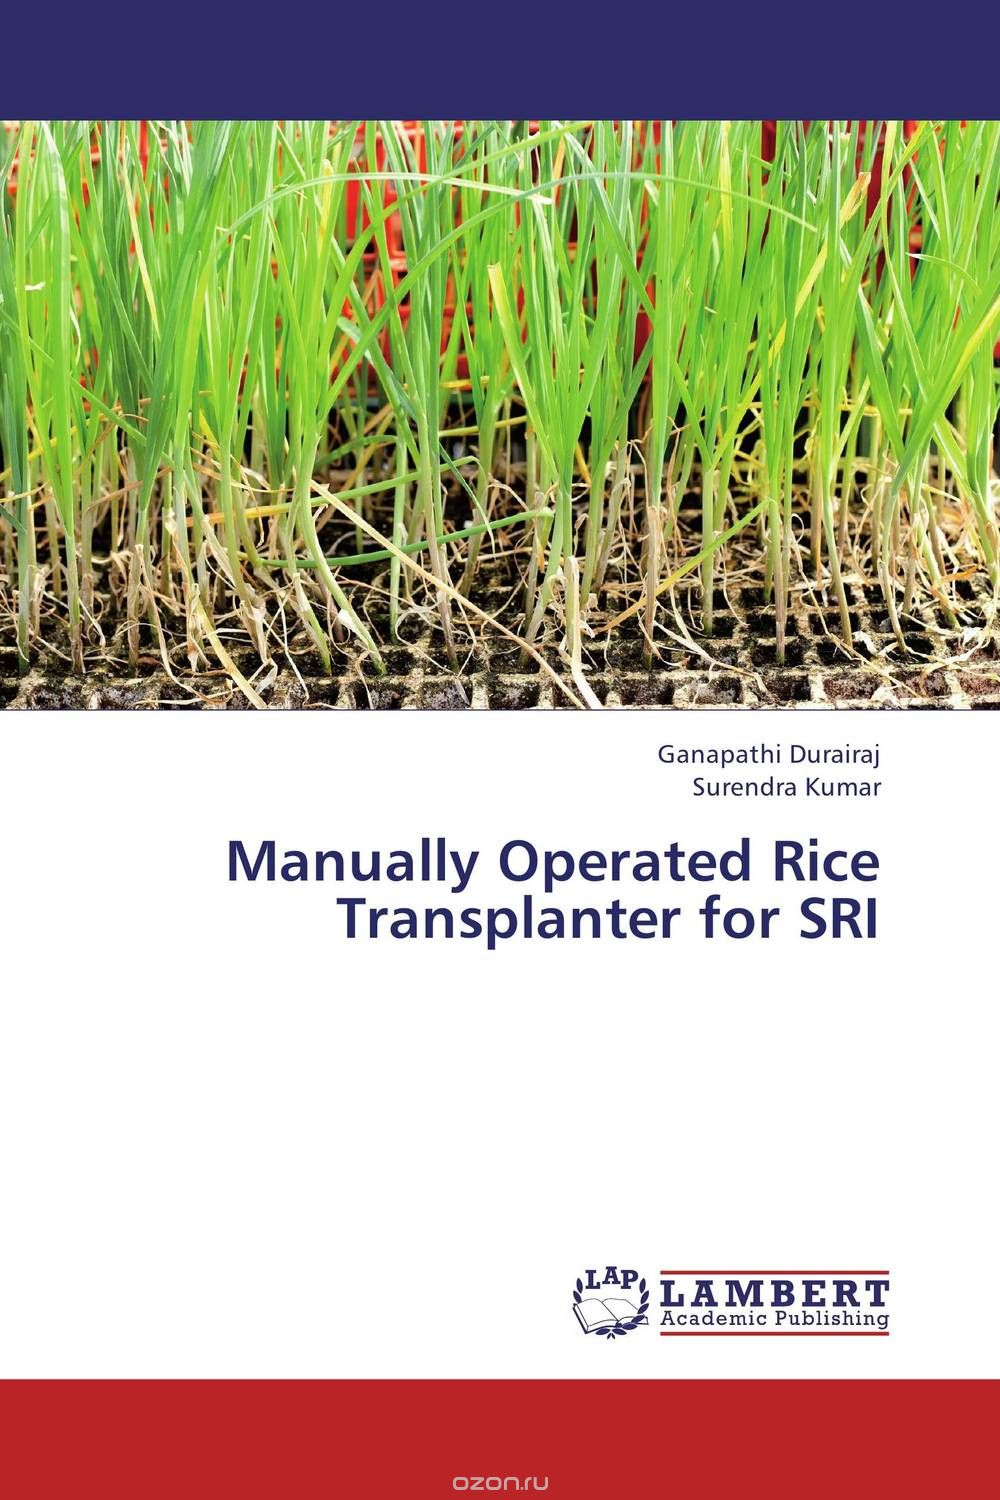 Скачать книгу "Manually Operated Rice Transplanter for SRI"